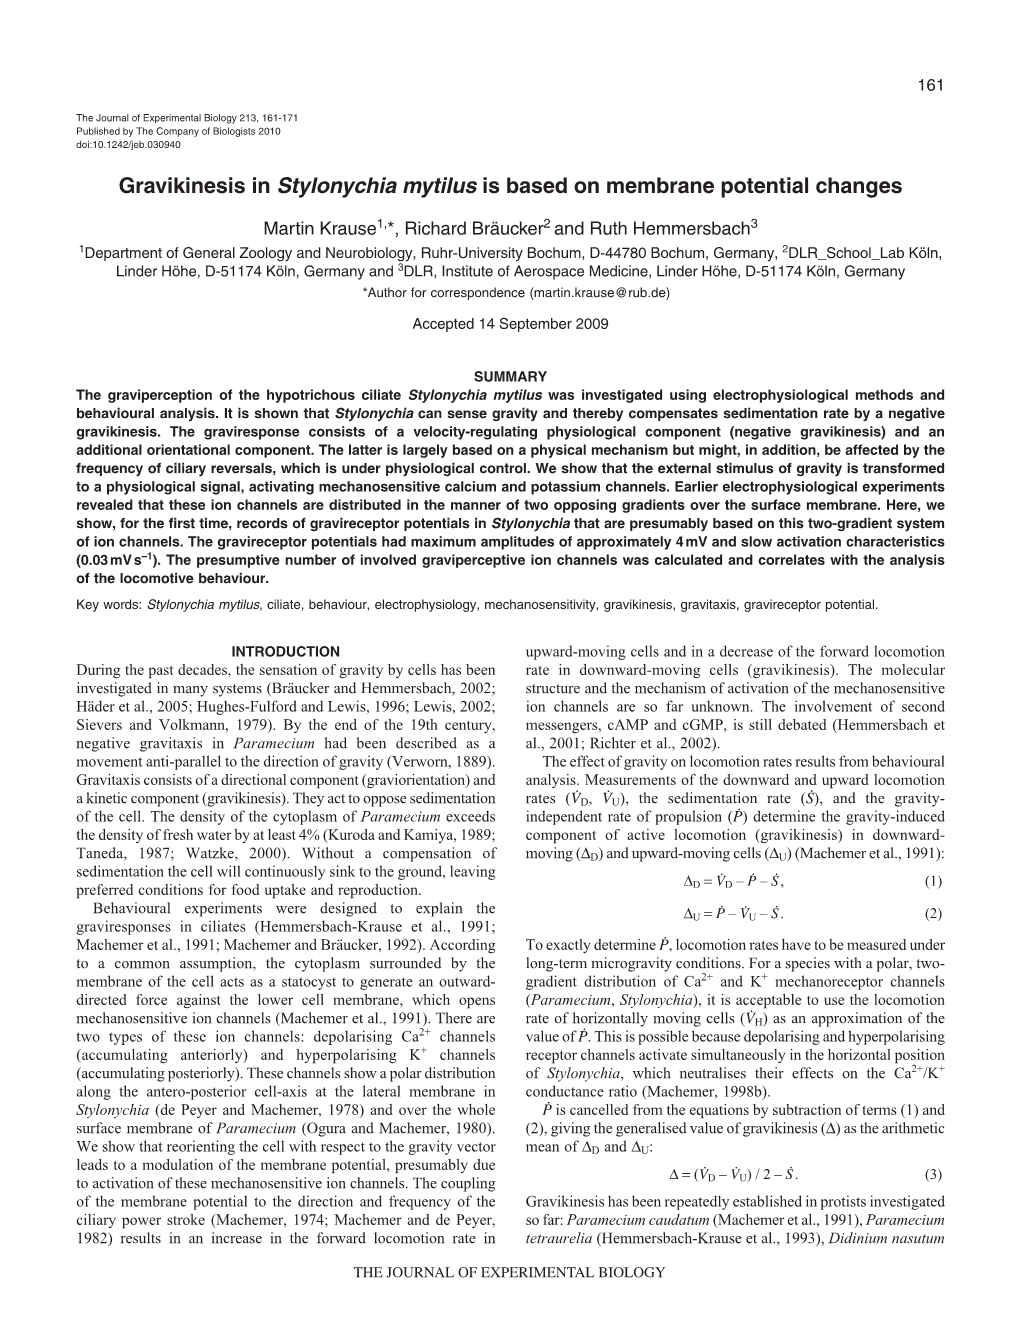 Gravikinesis in Stylonychia Mytilus Is Based on Membrane Potential Changes